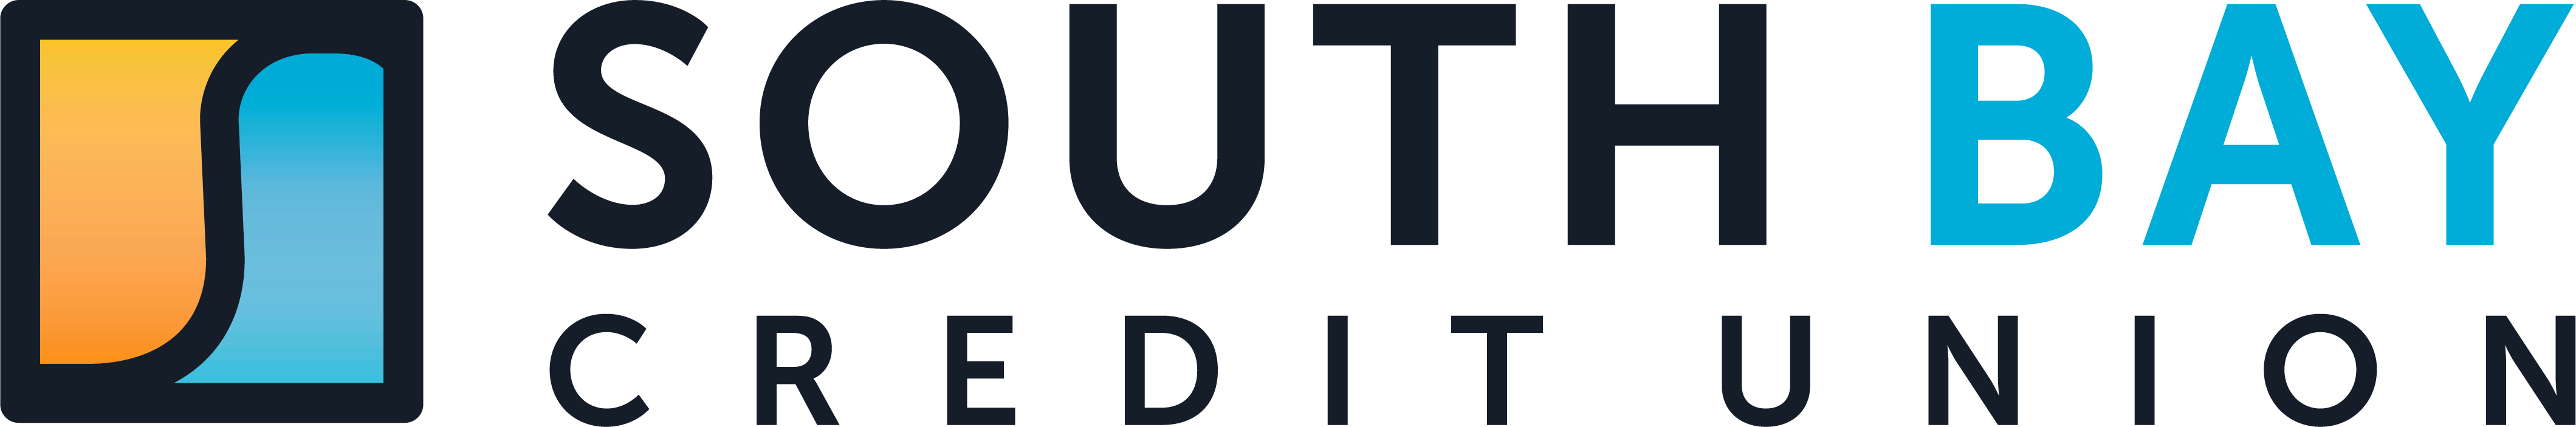 South Bay Credit Union logo